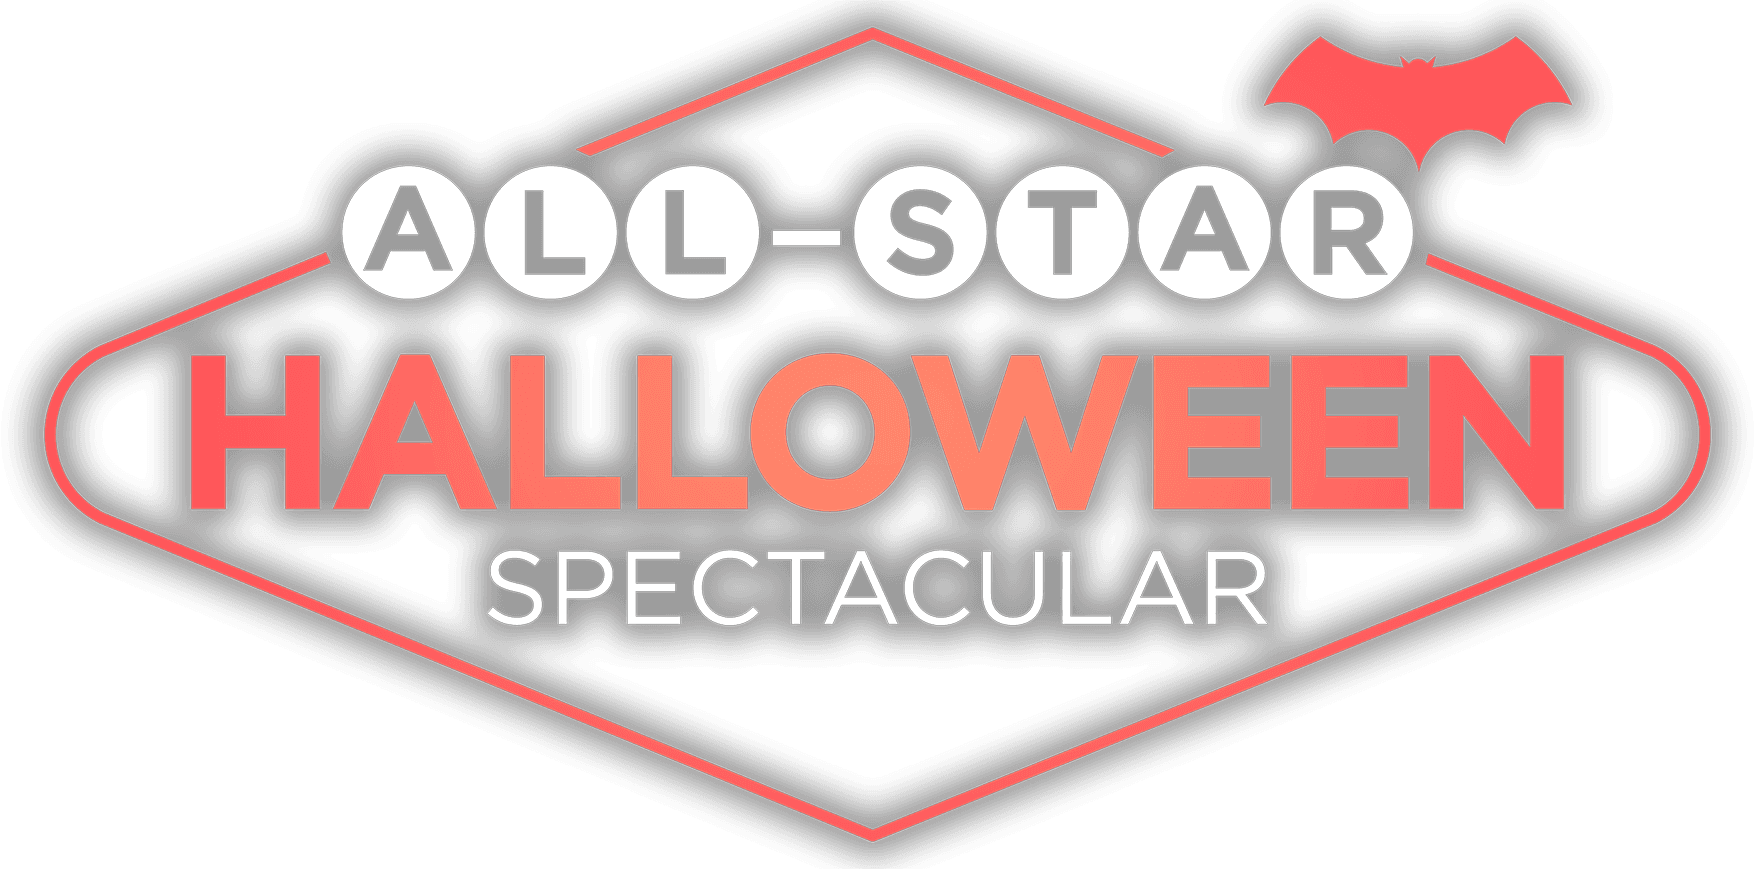 All-Star Halloween Spectacular logo